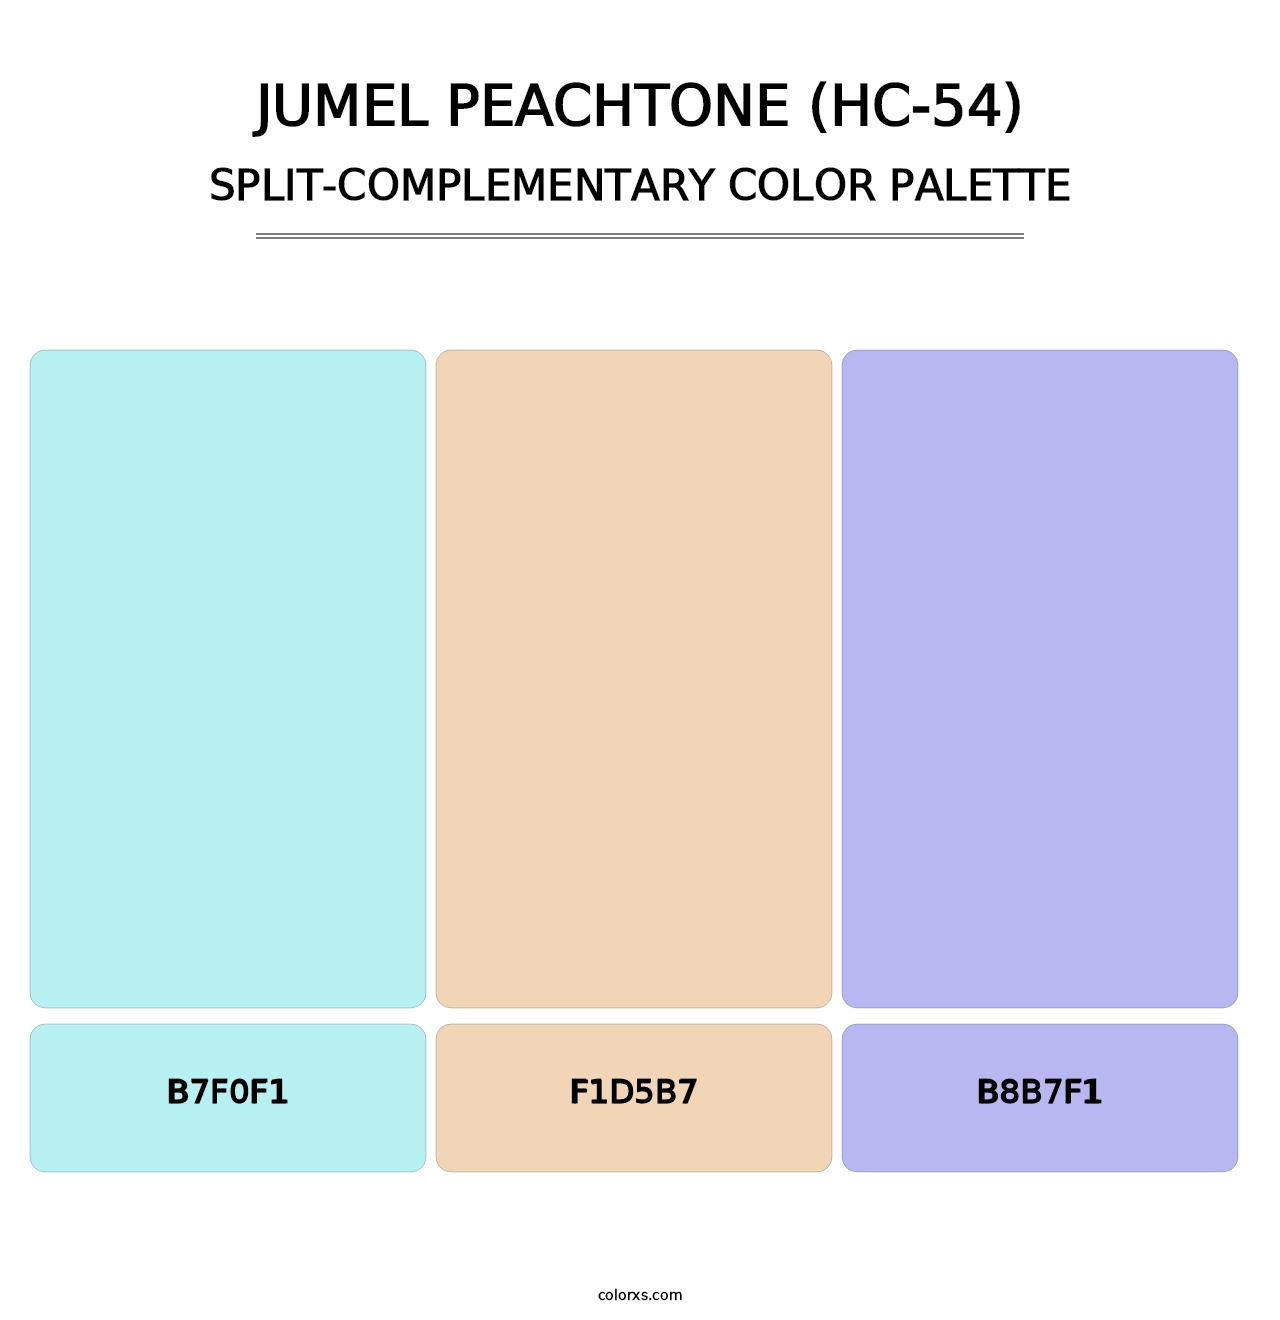 Jumel Peachtone (HC-54) - Split-Complementary Color Palette